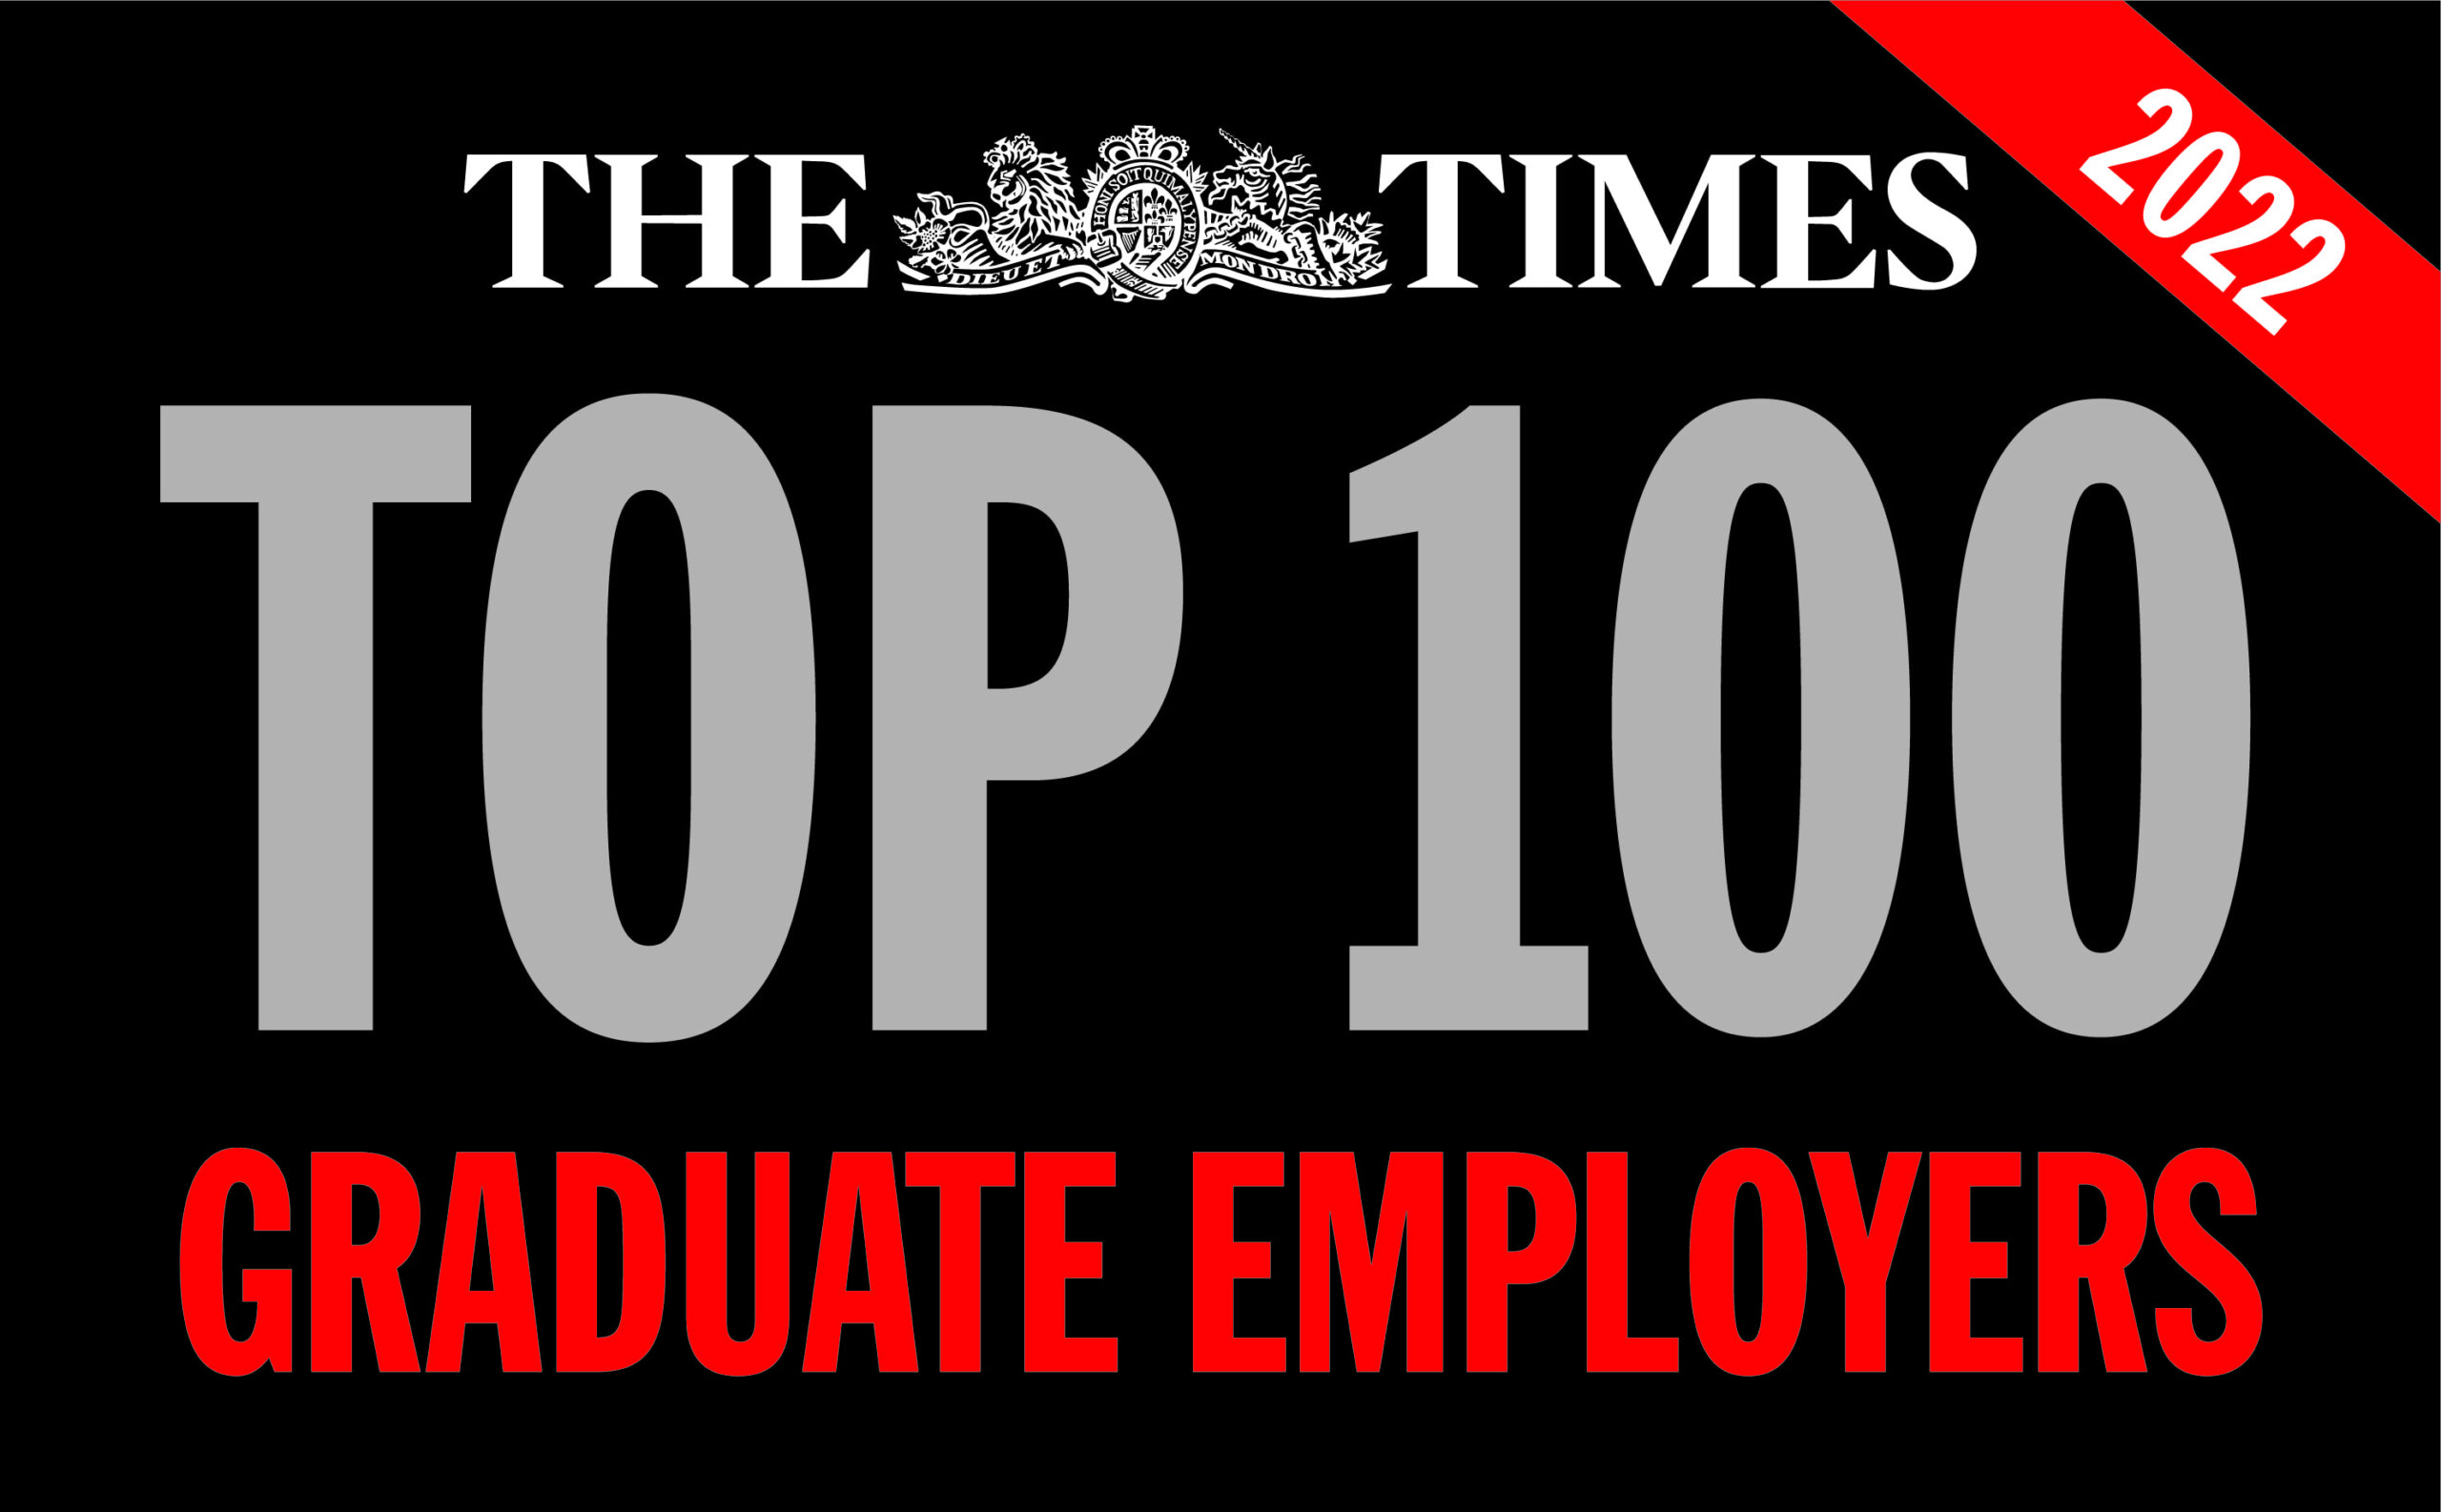 Times Top 100 Graduate Employers logo